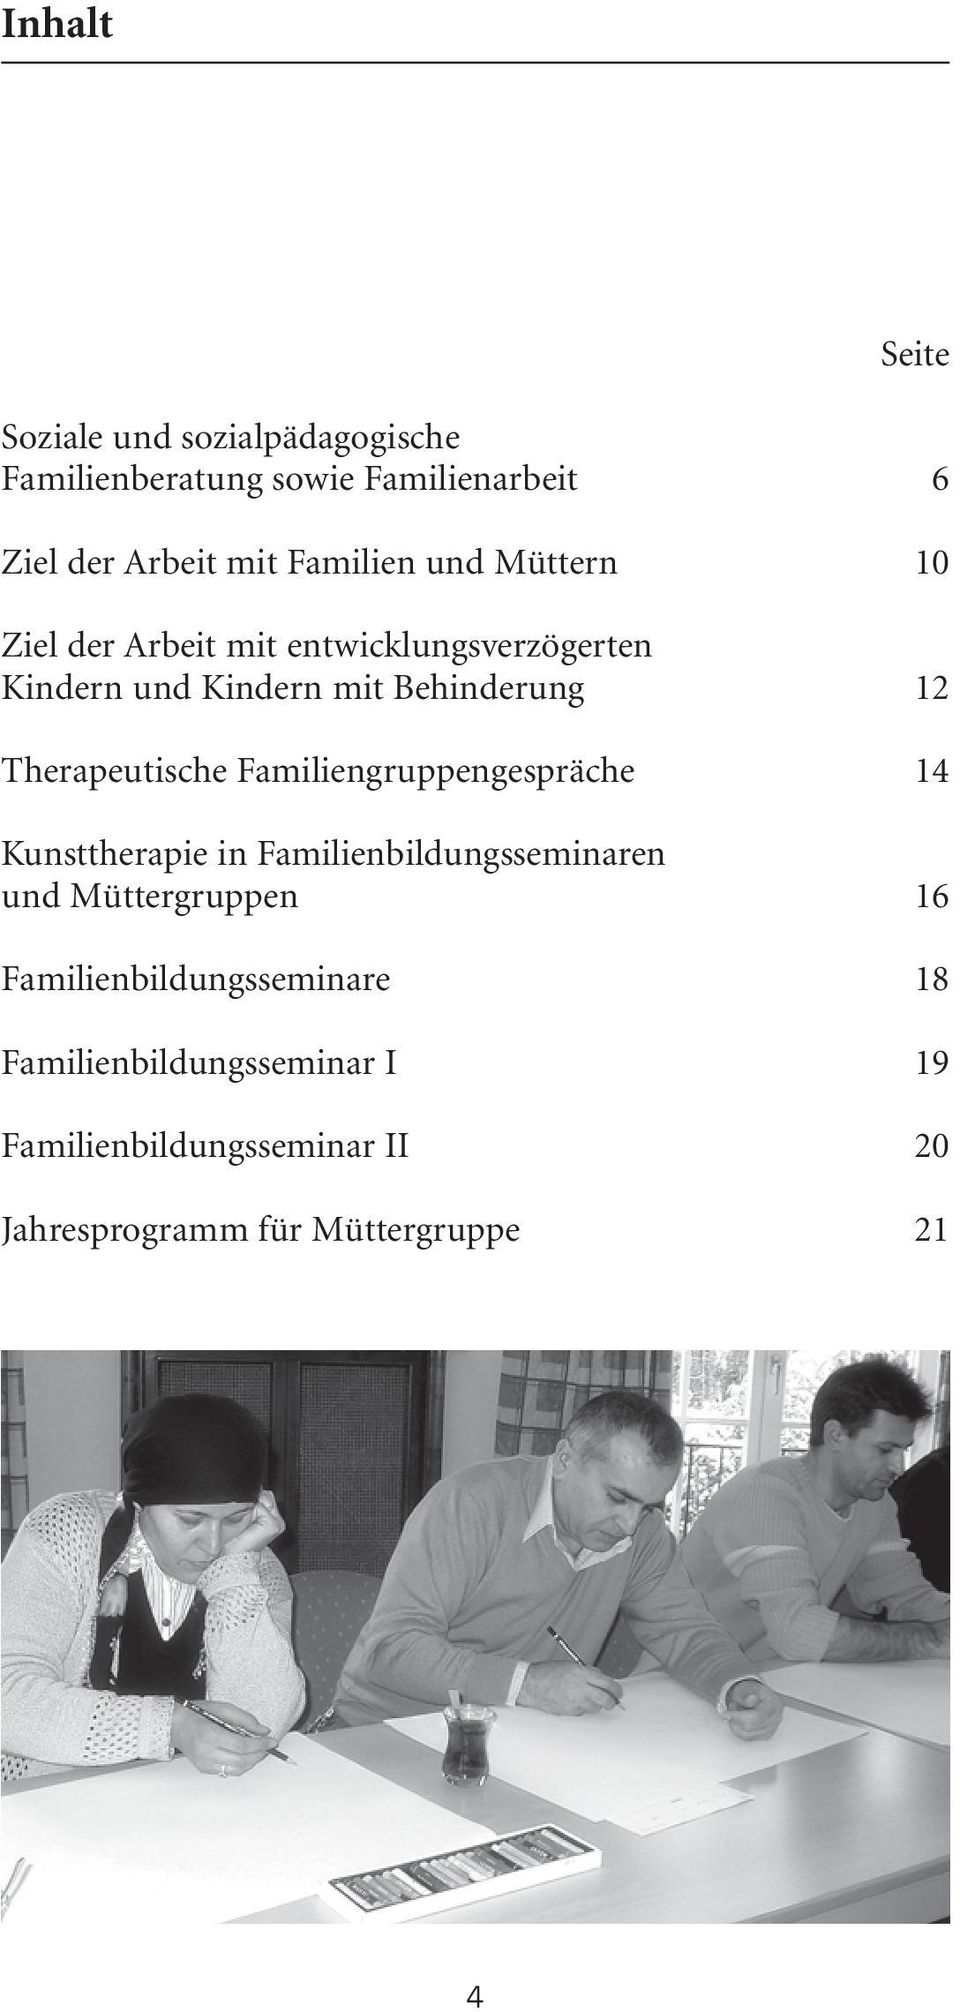 Therapeutische Familiegruppegespräche 14 Kusttherapie i Familiebildugssemiare ud Müttergruppe 16